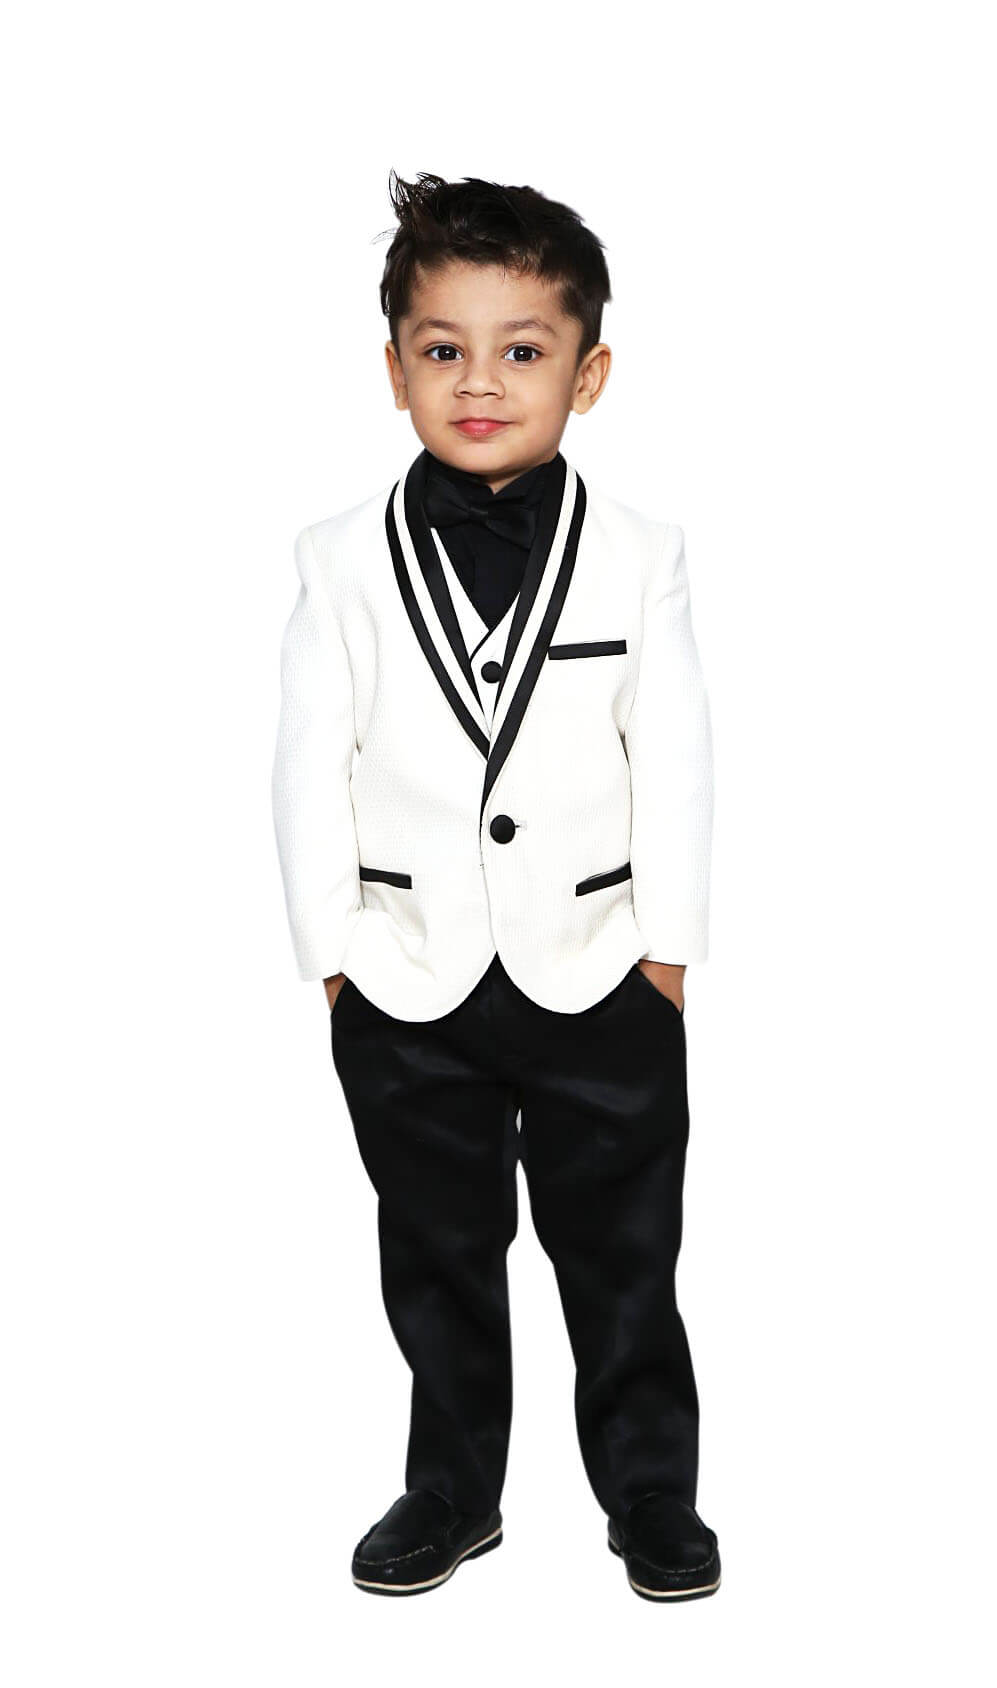 Stylish Children Tuxedo Suit - Baby Boys Formal Occasion Wear